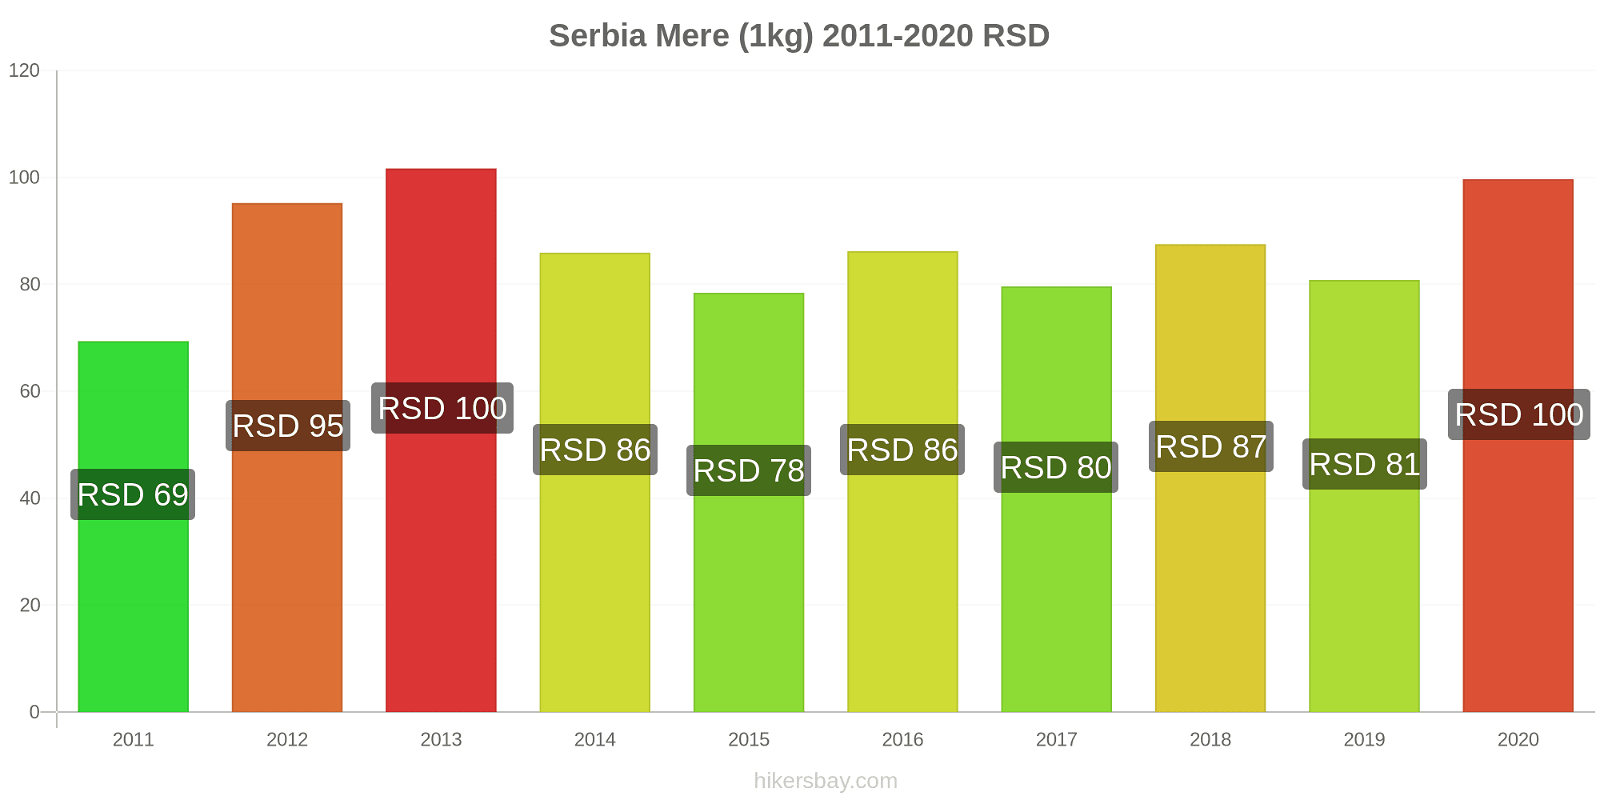 Serbia modificări de preț Mere (1kg) hikersbay.com